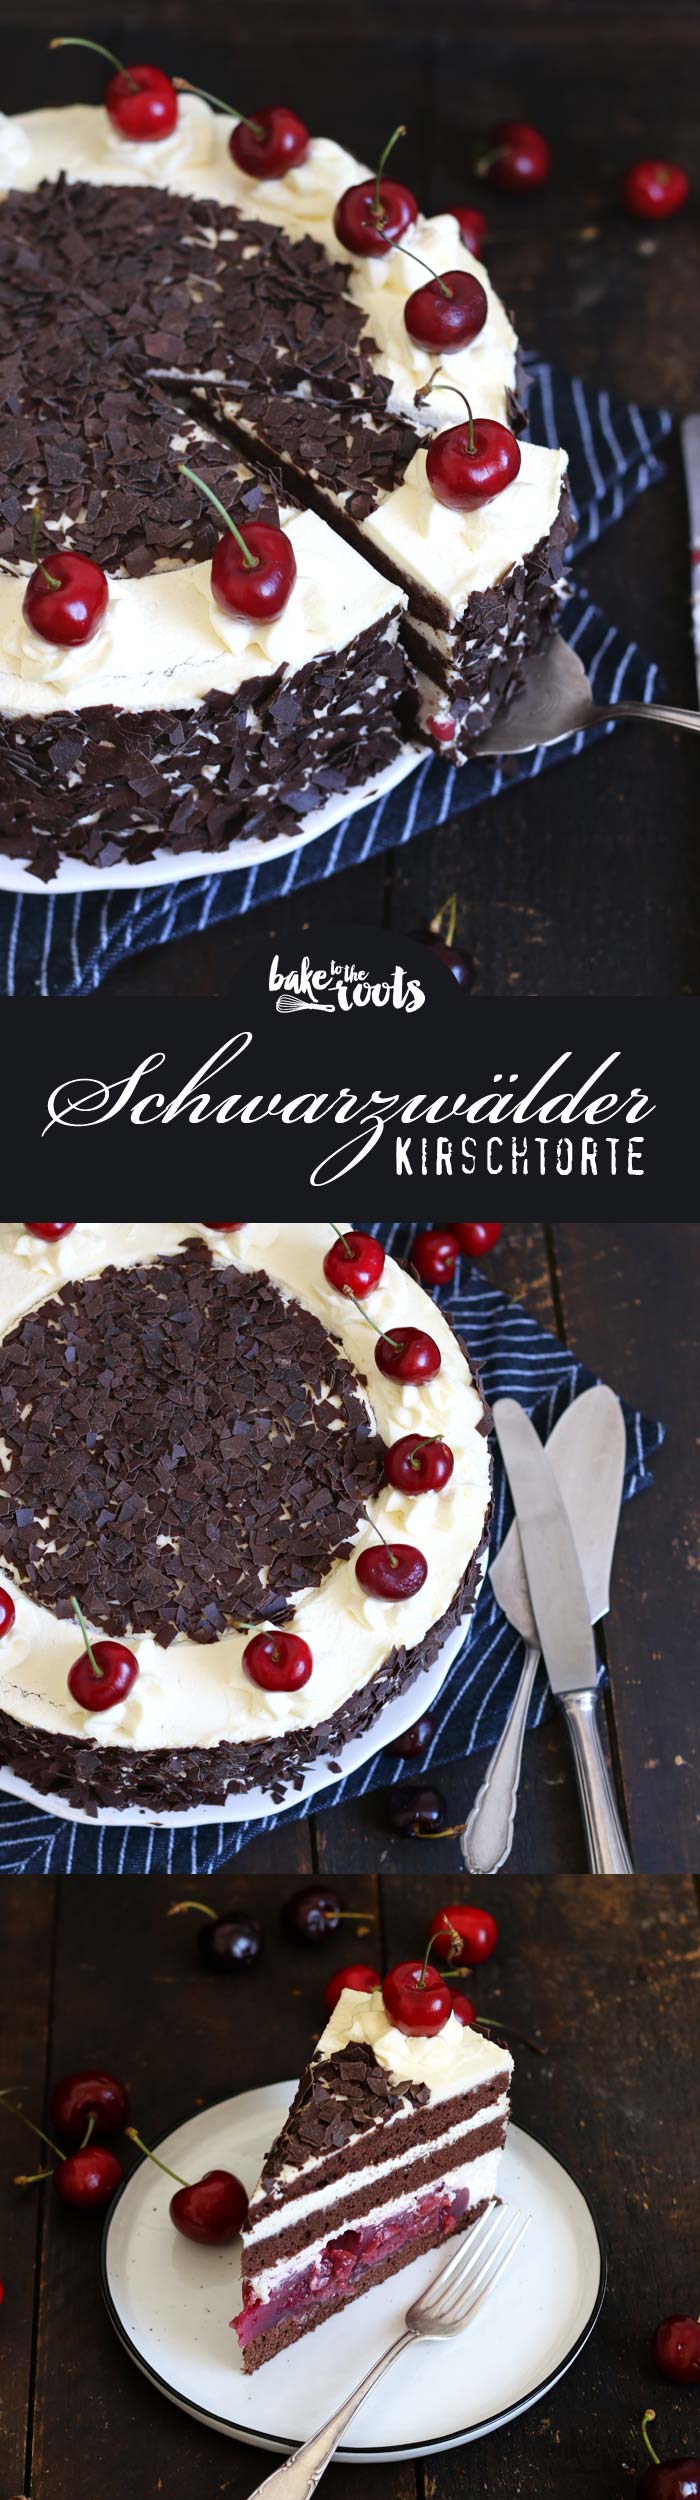 Leckere Schwarzwälder Kirschtorte – Schritt für Schritt Anleitung | Bake to the roots